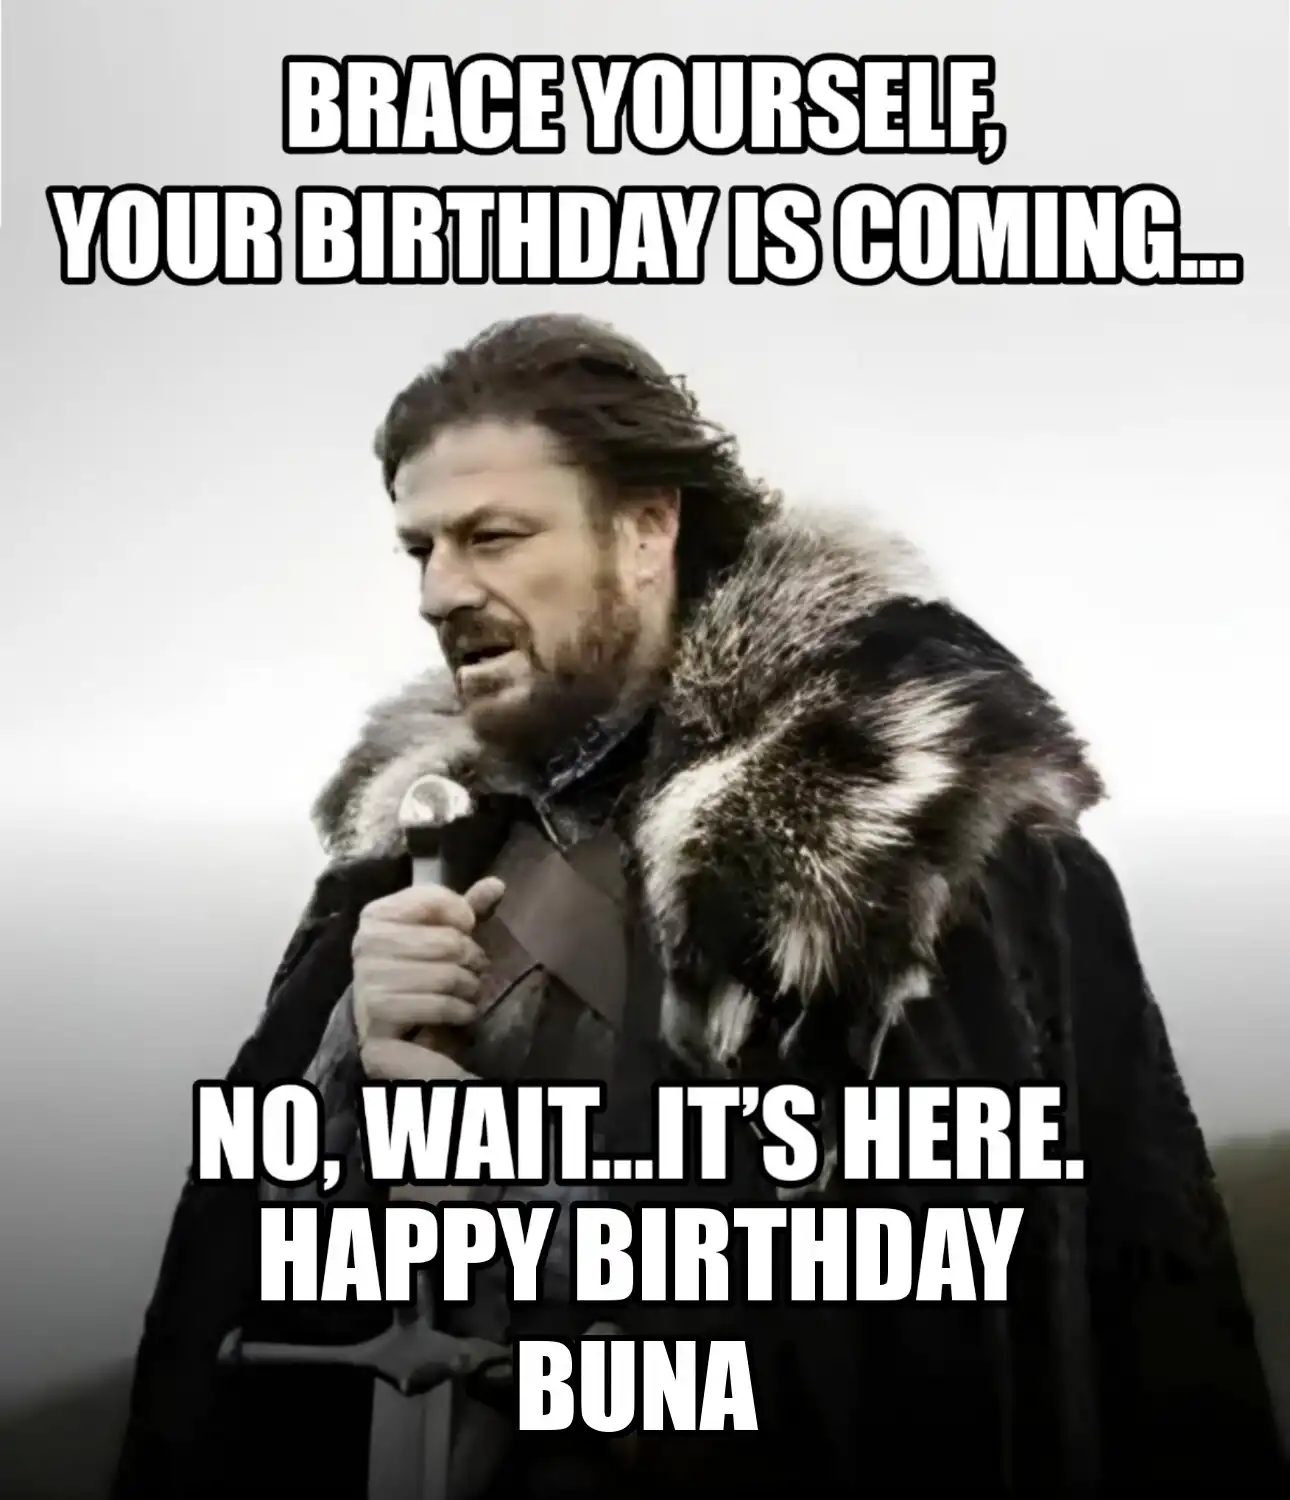 Happy Birthday Buna Brace Yourself Your Birthday Is Coming Meme